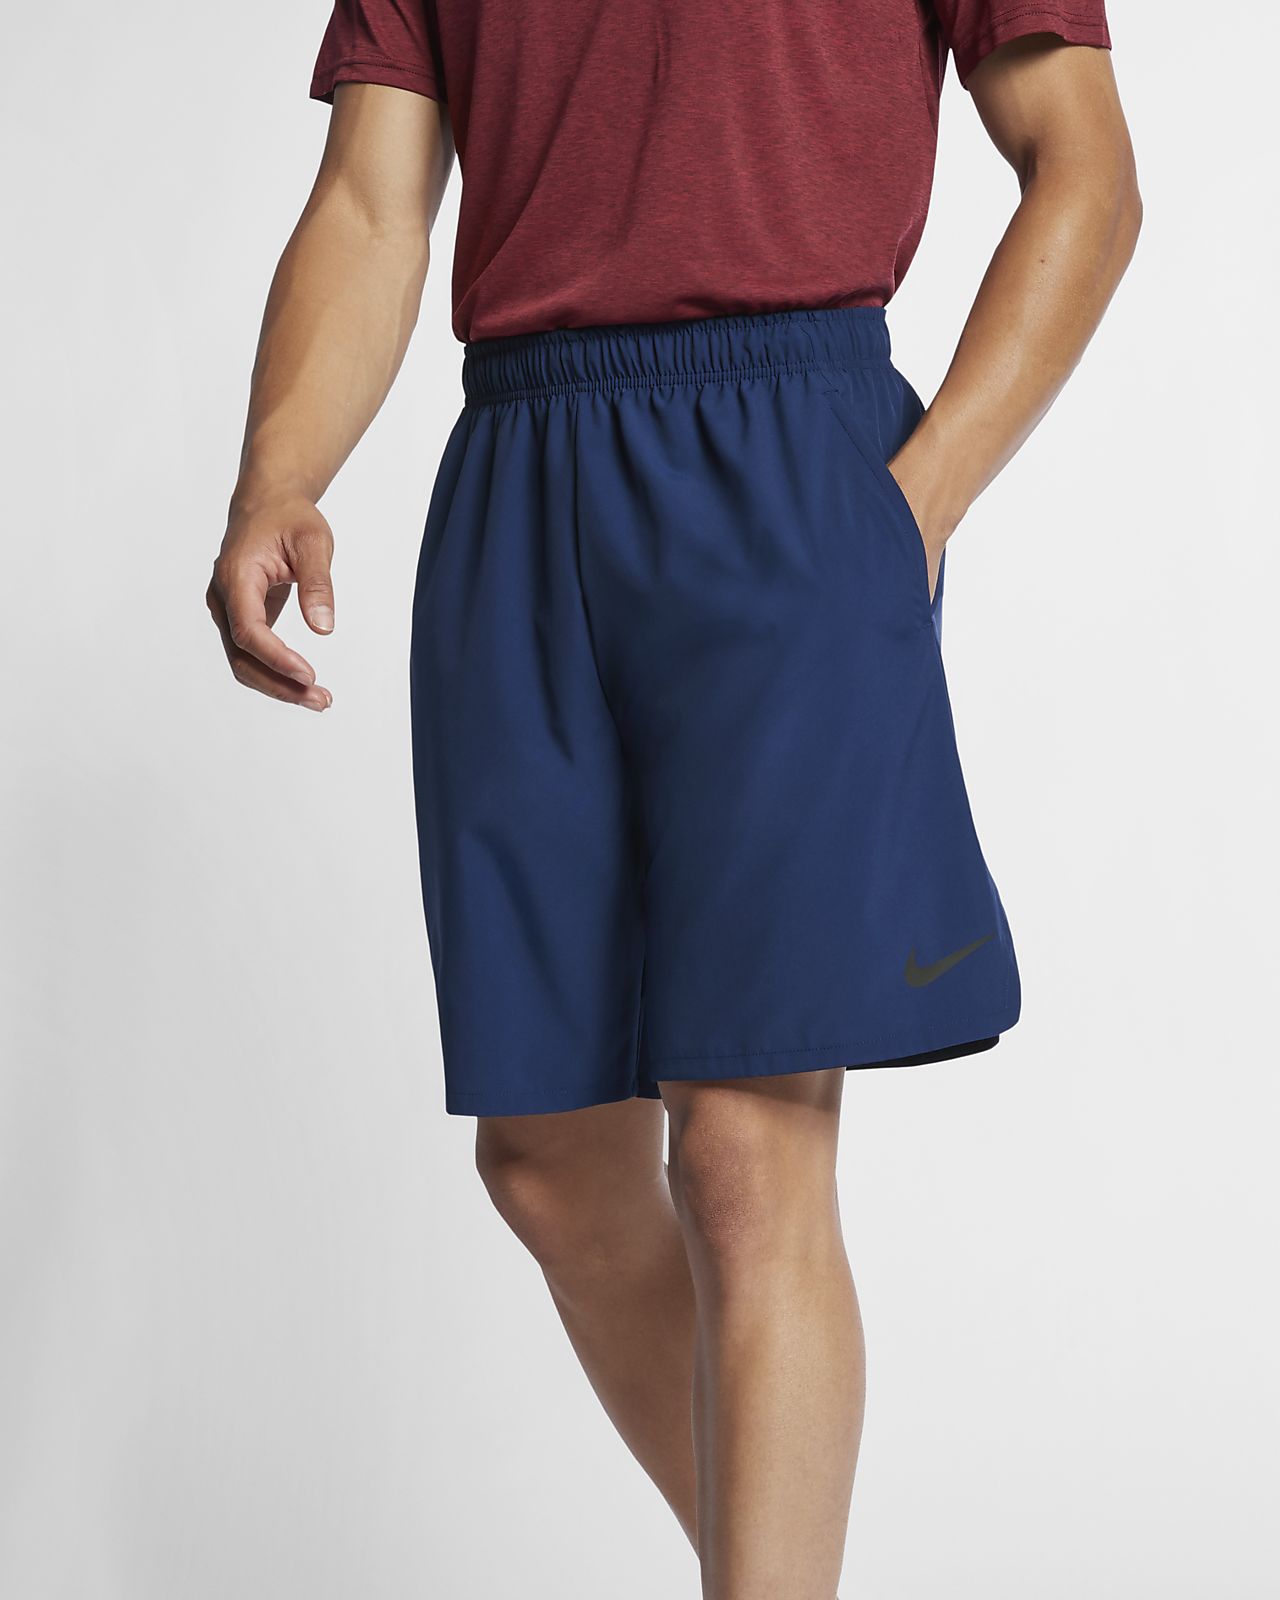 men's nike dri flex woven training shorts